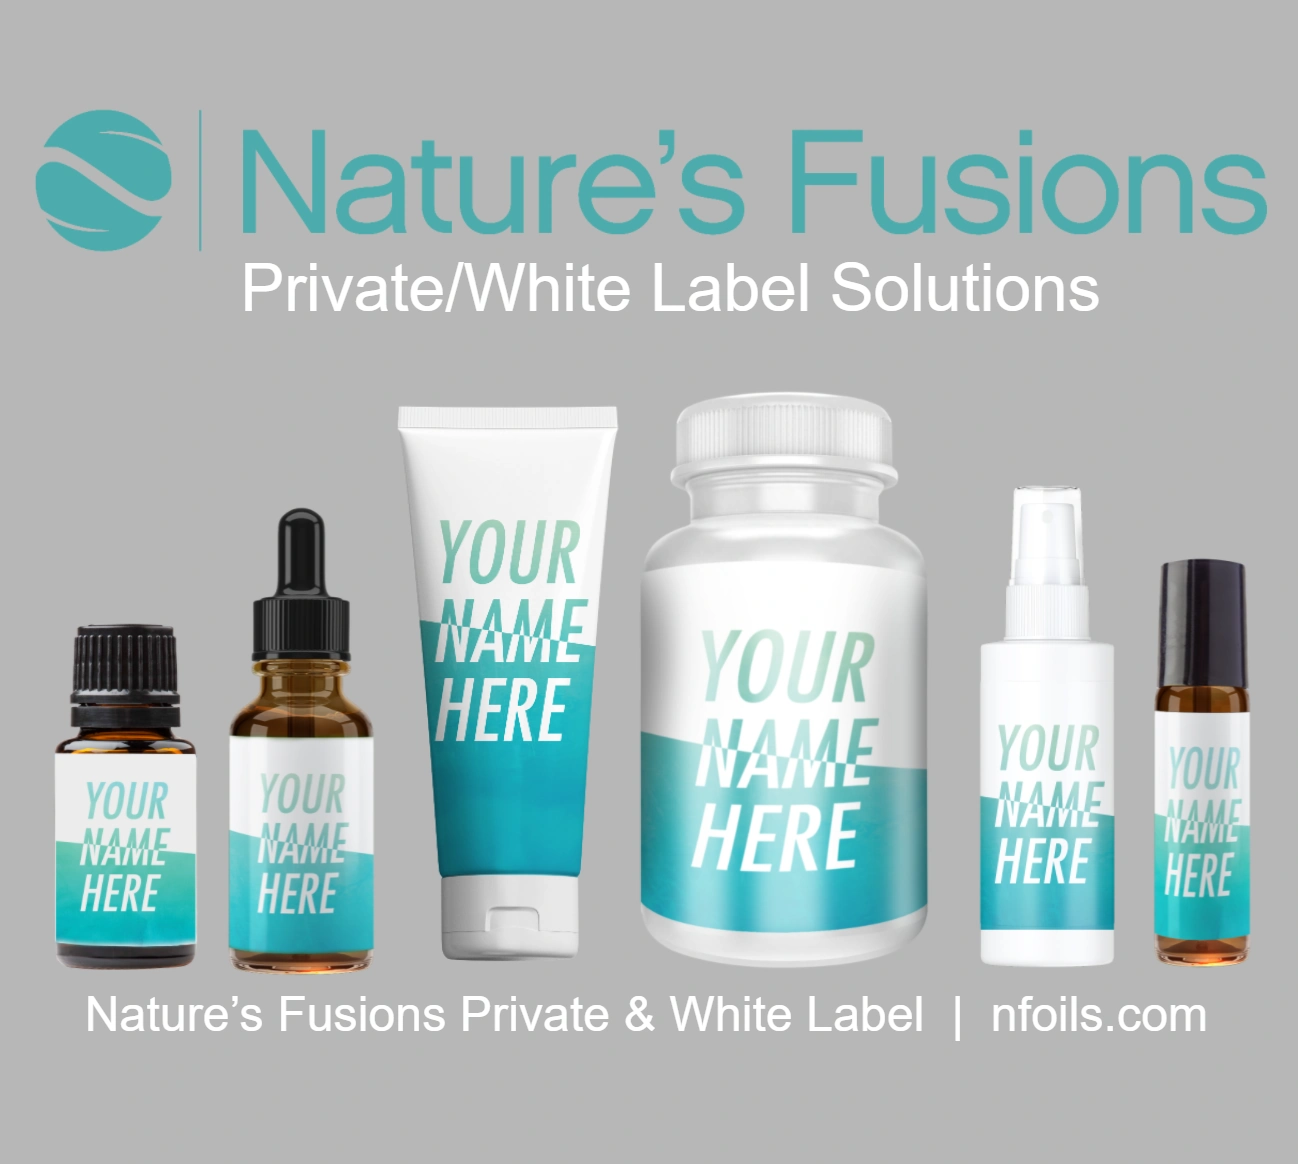 Nature's Fusions Private/White Label Solutions | nfoils.com